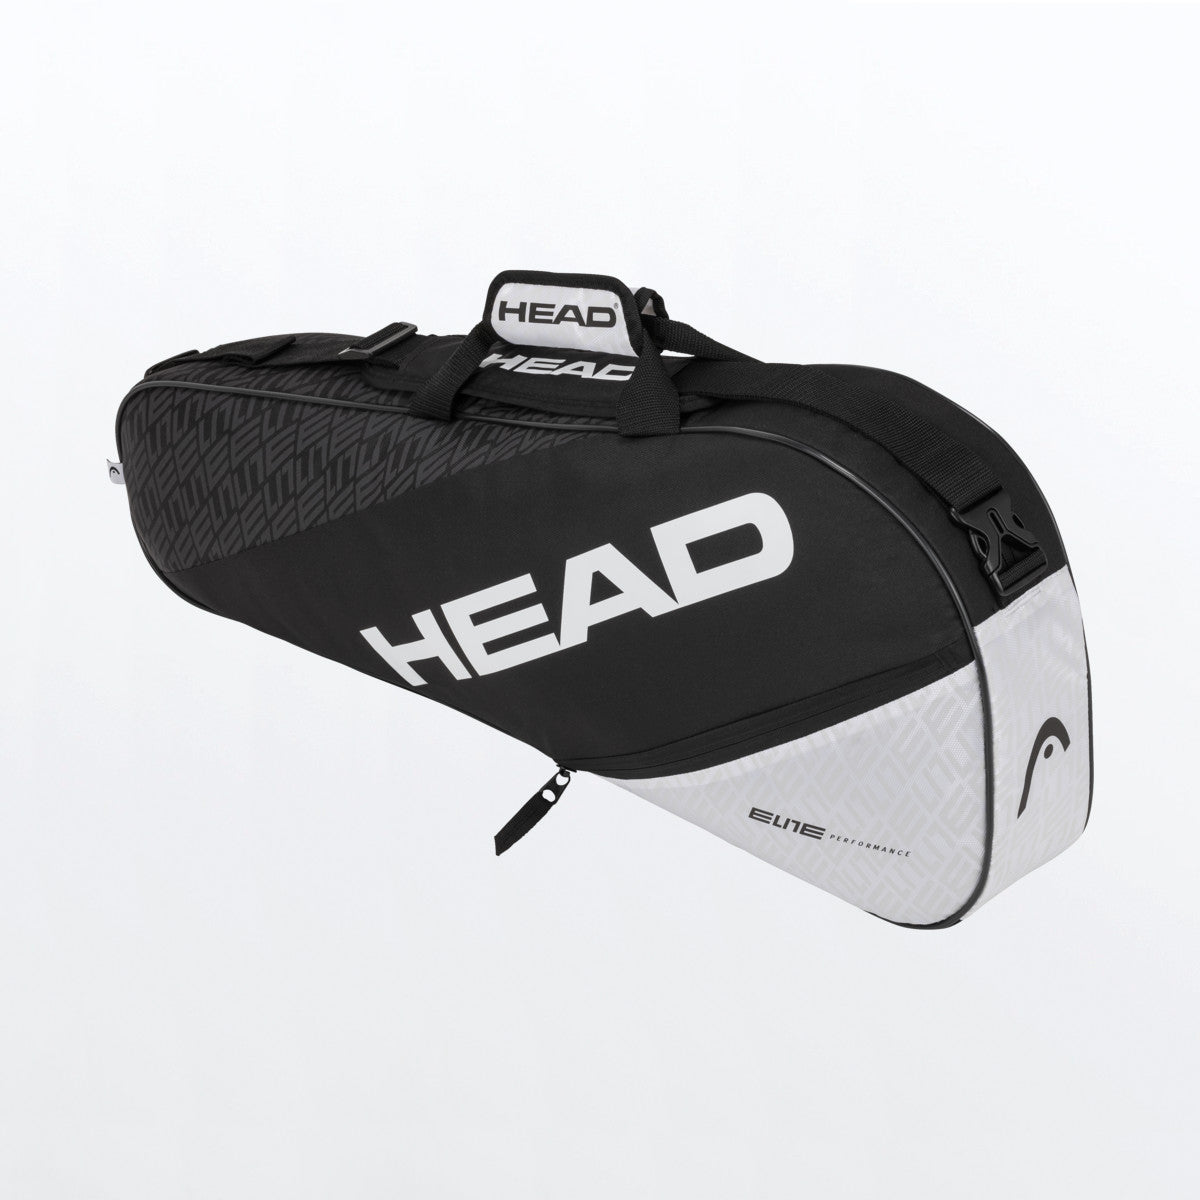 Head ELITE 3R PRO Racket Bag